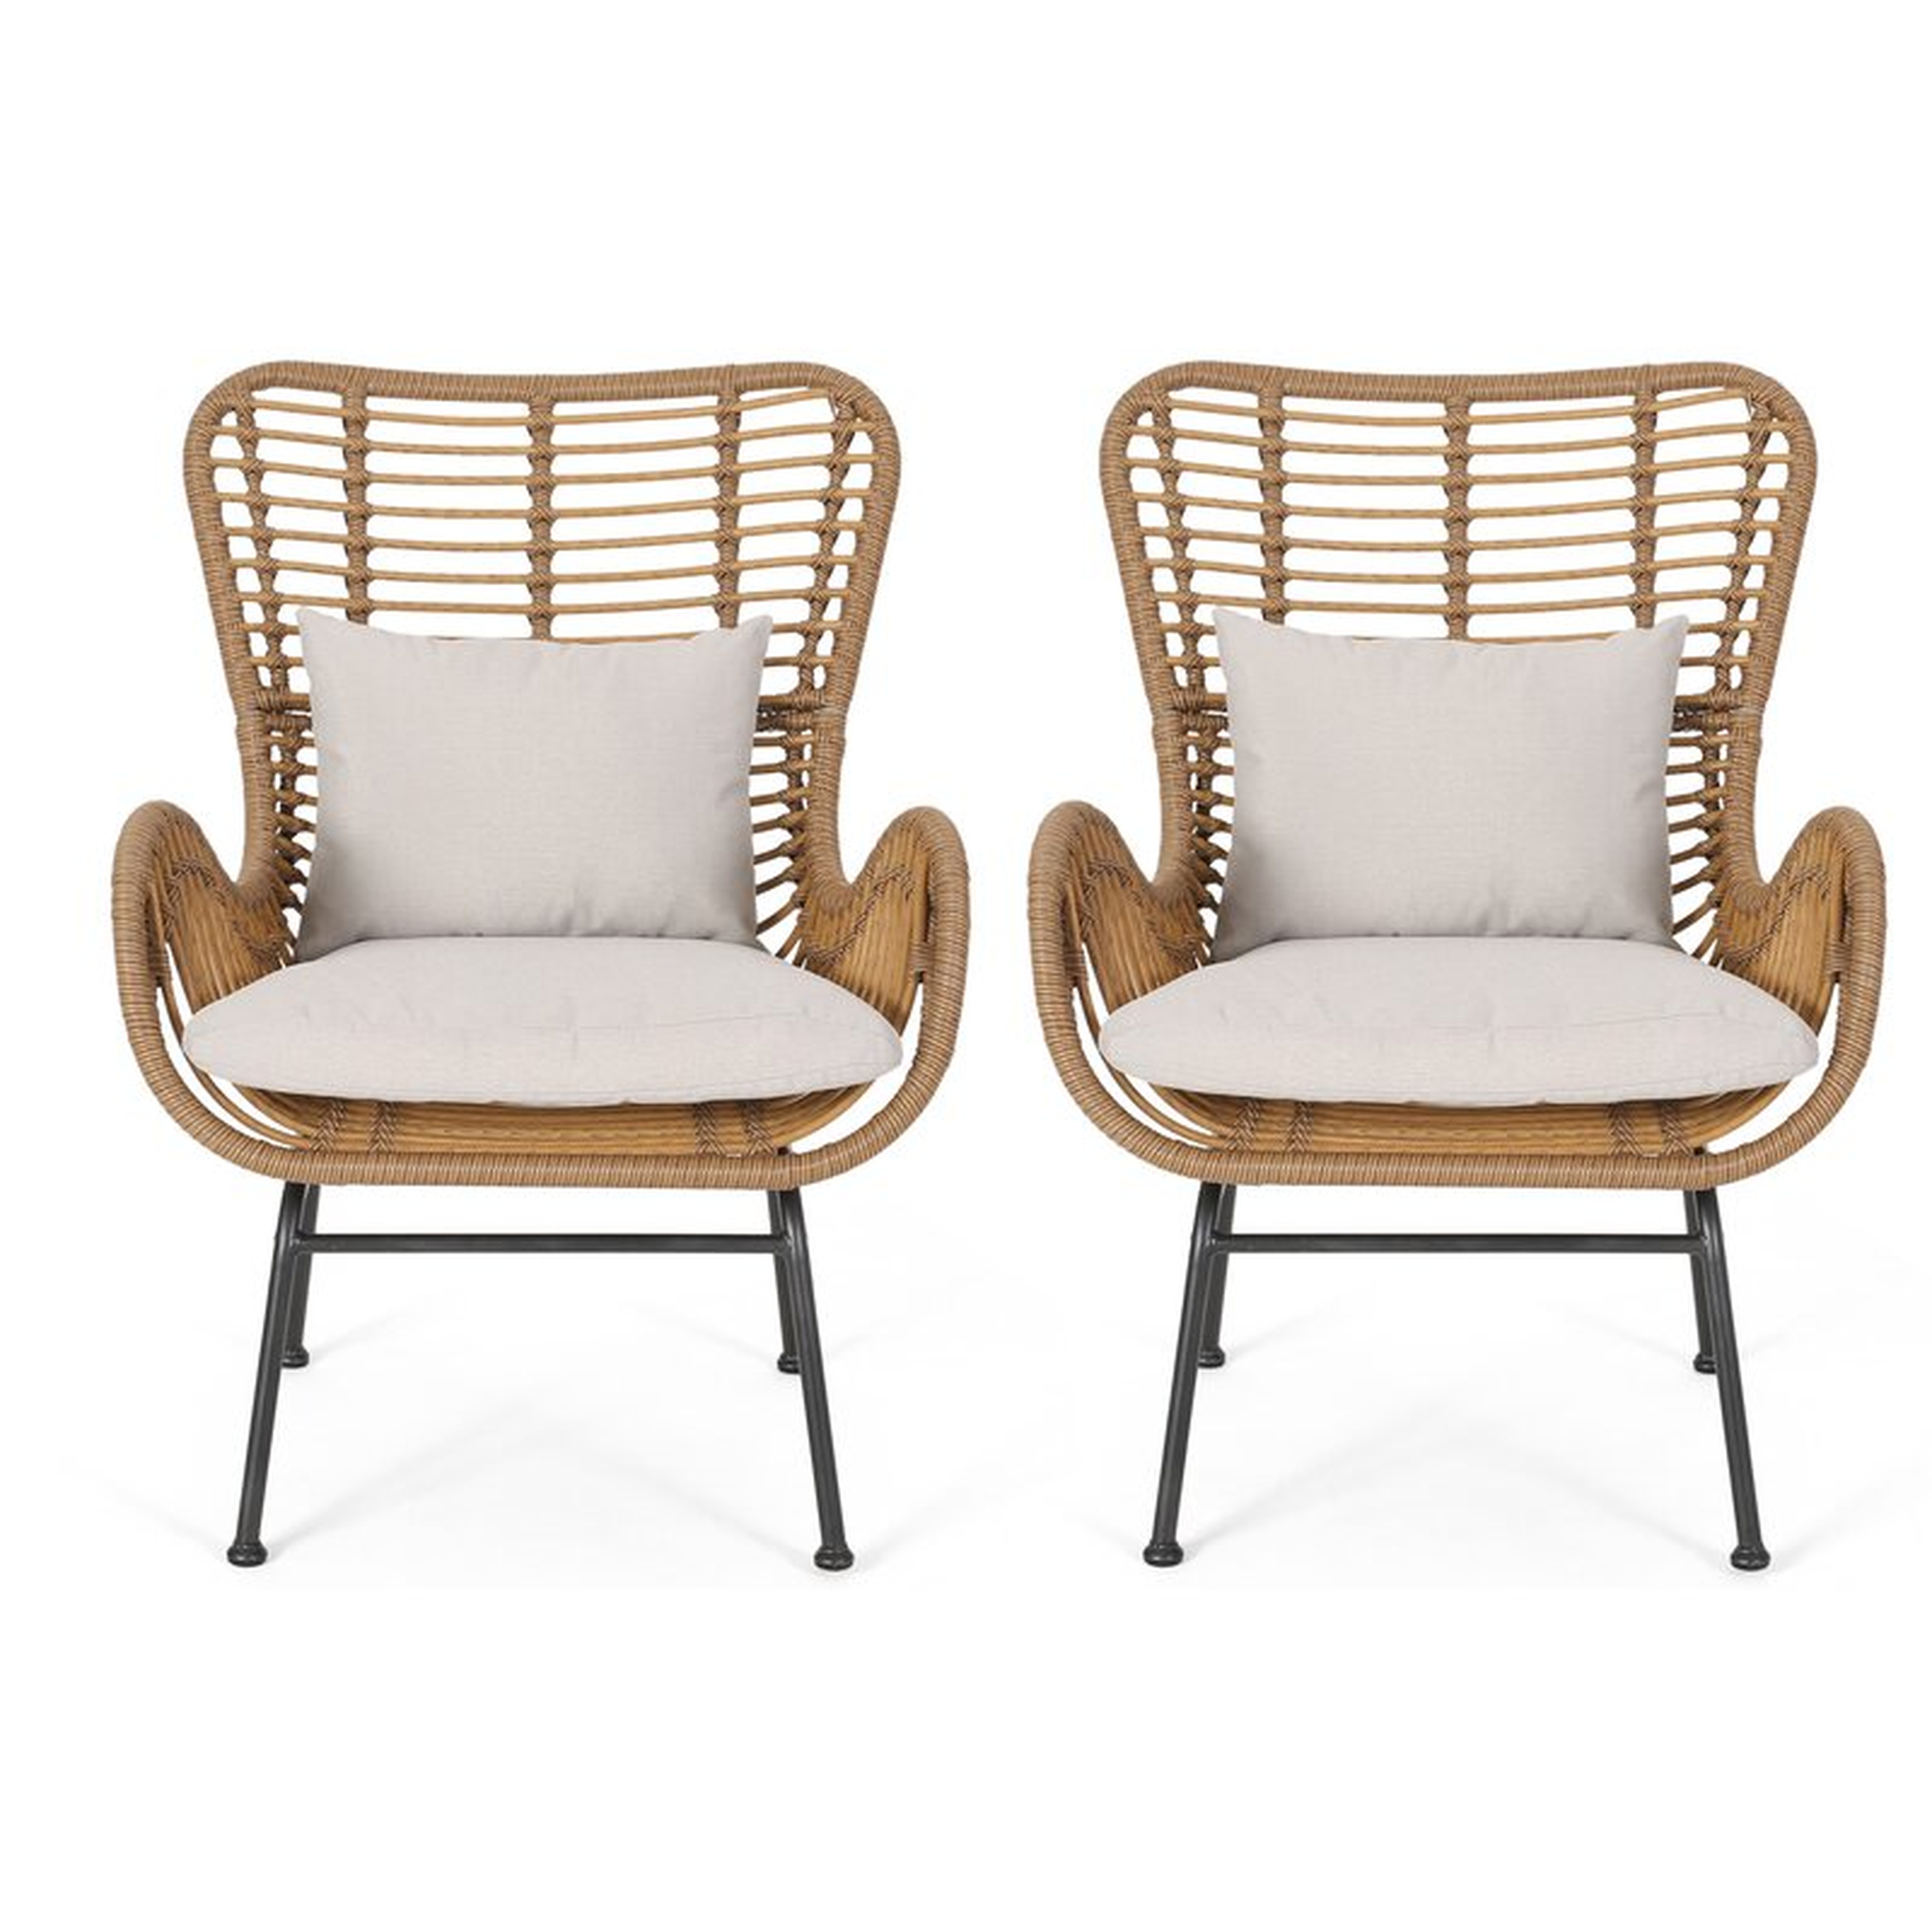 Tapscott Wicker Patio Chair with Cushions (Set of 2) - Wayfair